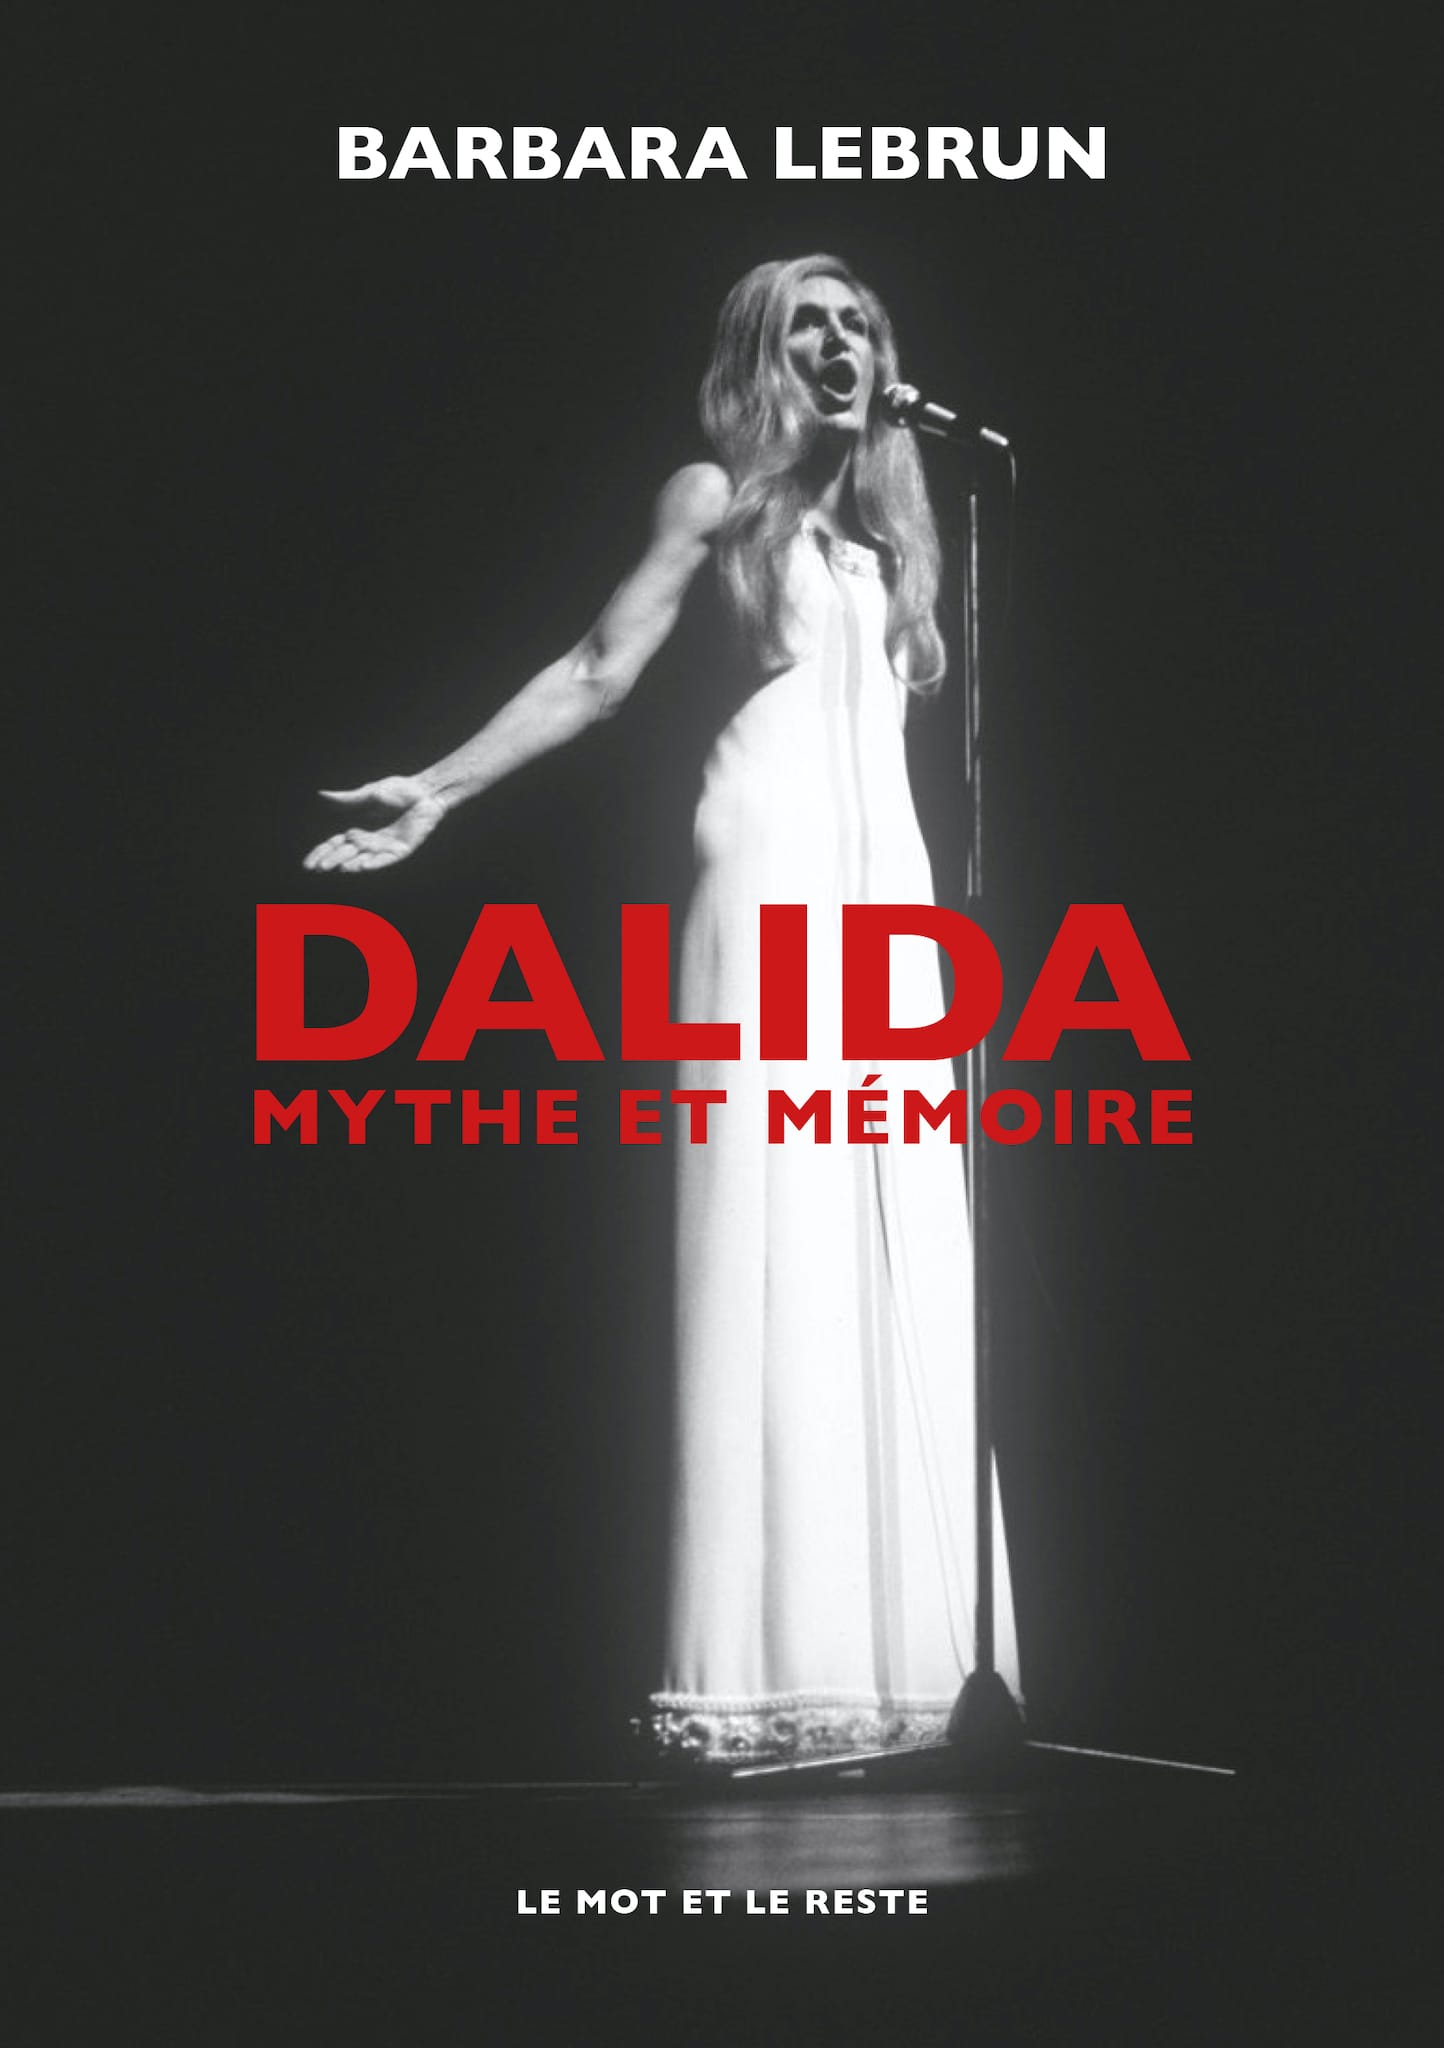 Dalida - Mythe et mémoire de Barbara Lebrun couverture livre